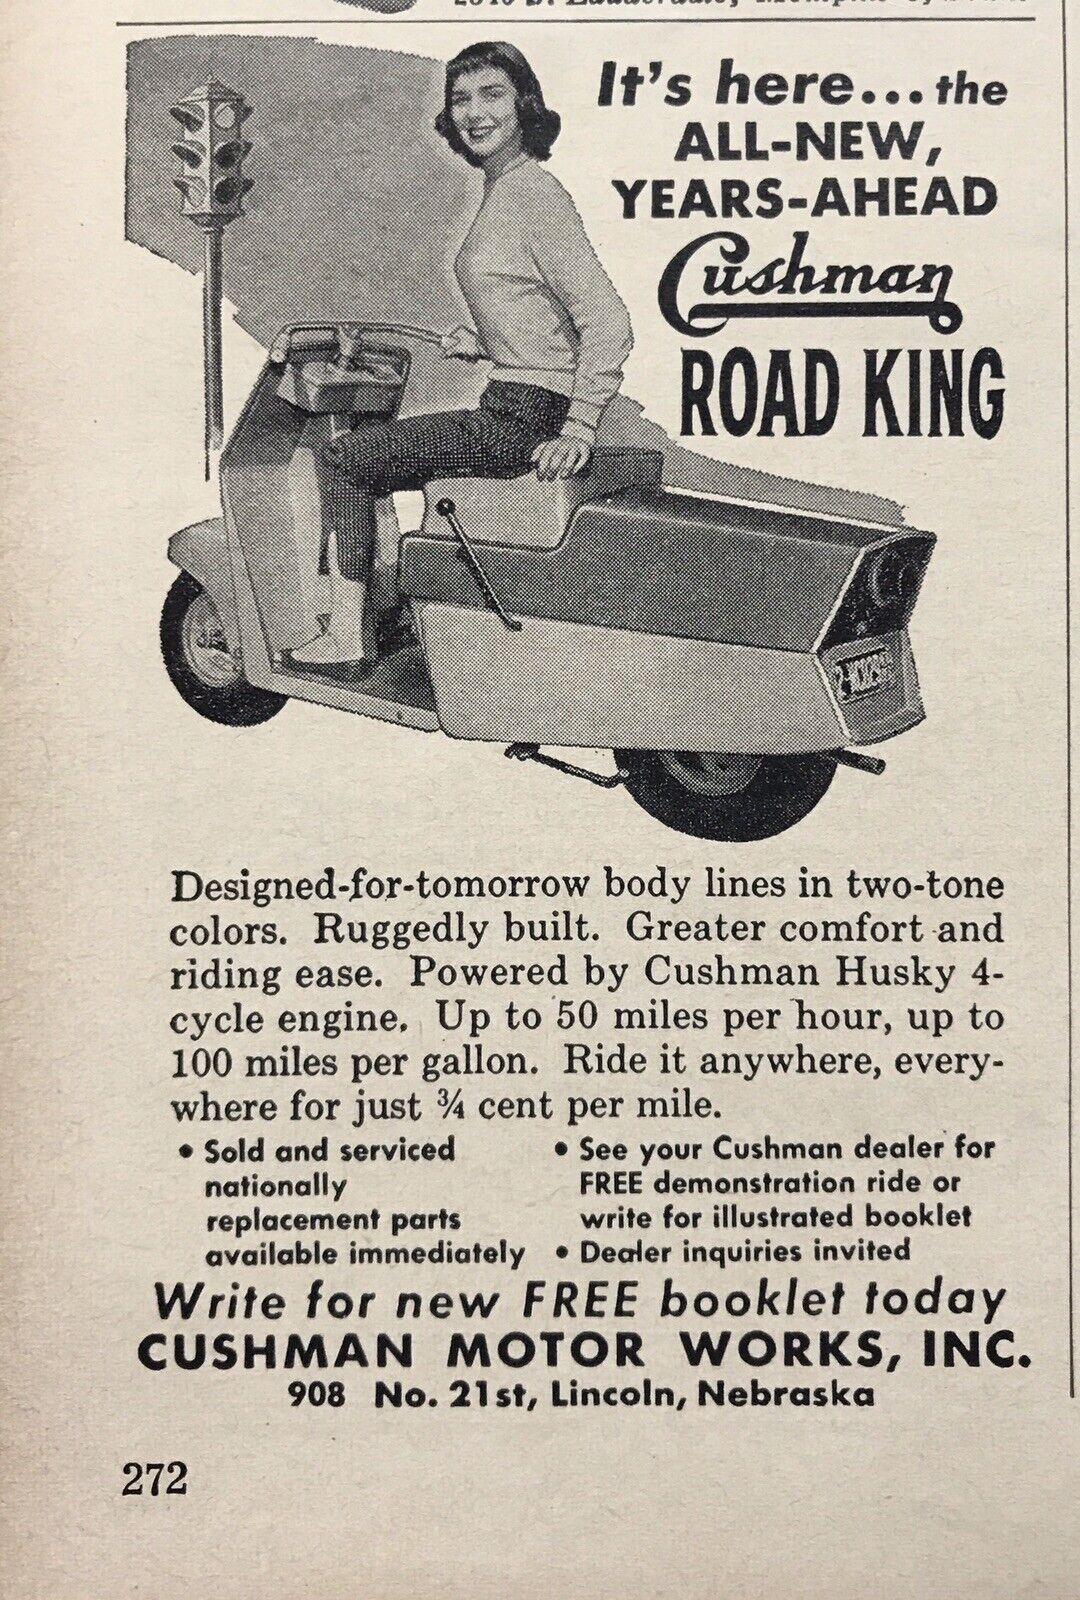 1957 Cushman Husky Road King Motor Scooter Vintage B&W Print Ad 3”x5” PMM 272